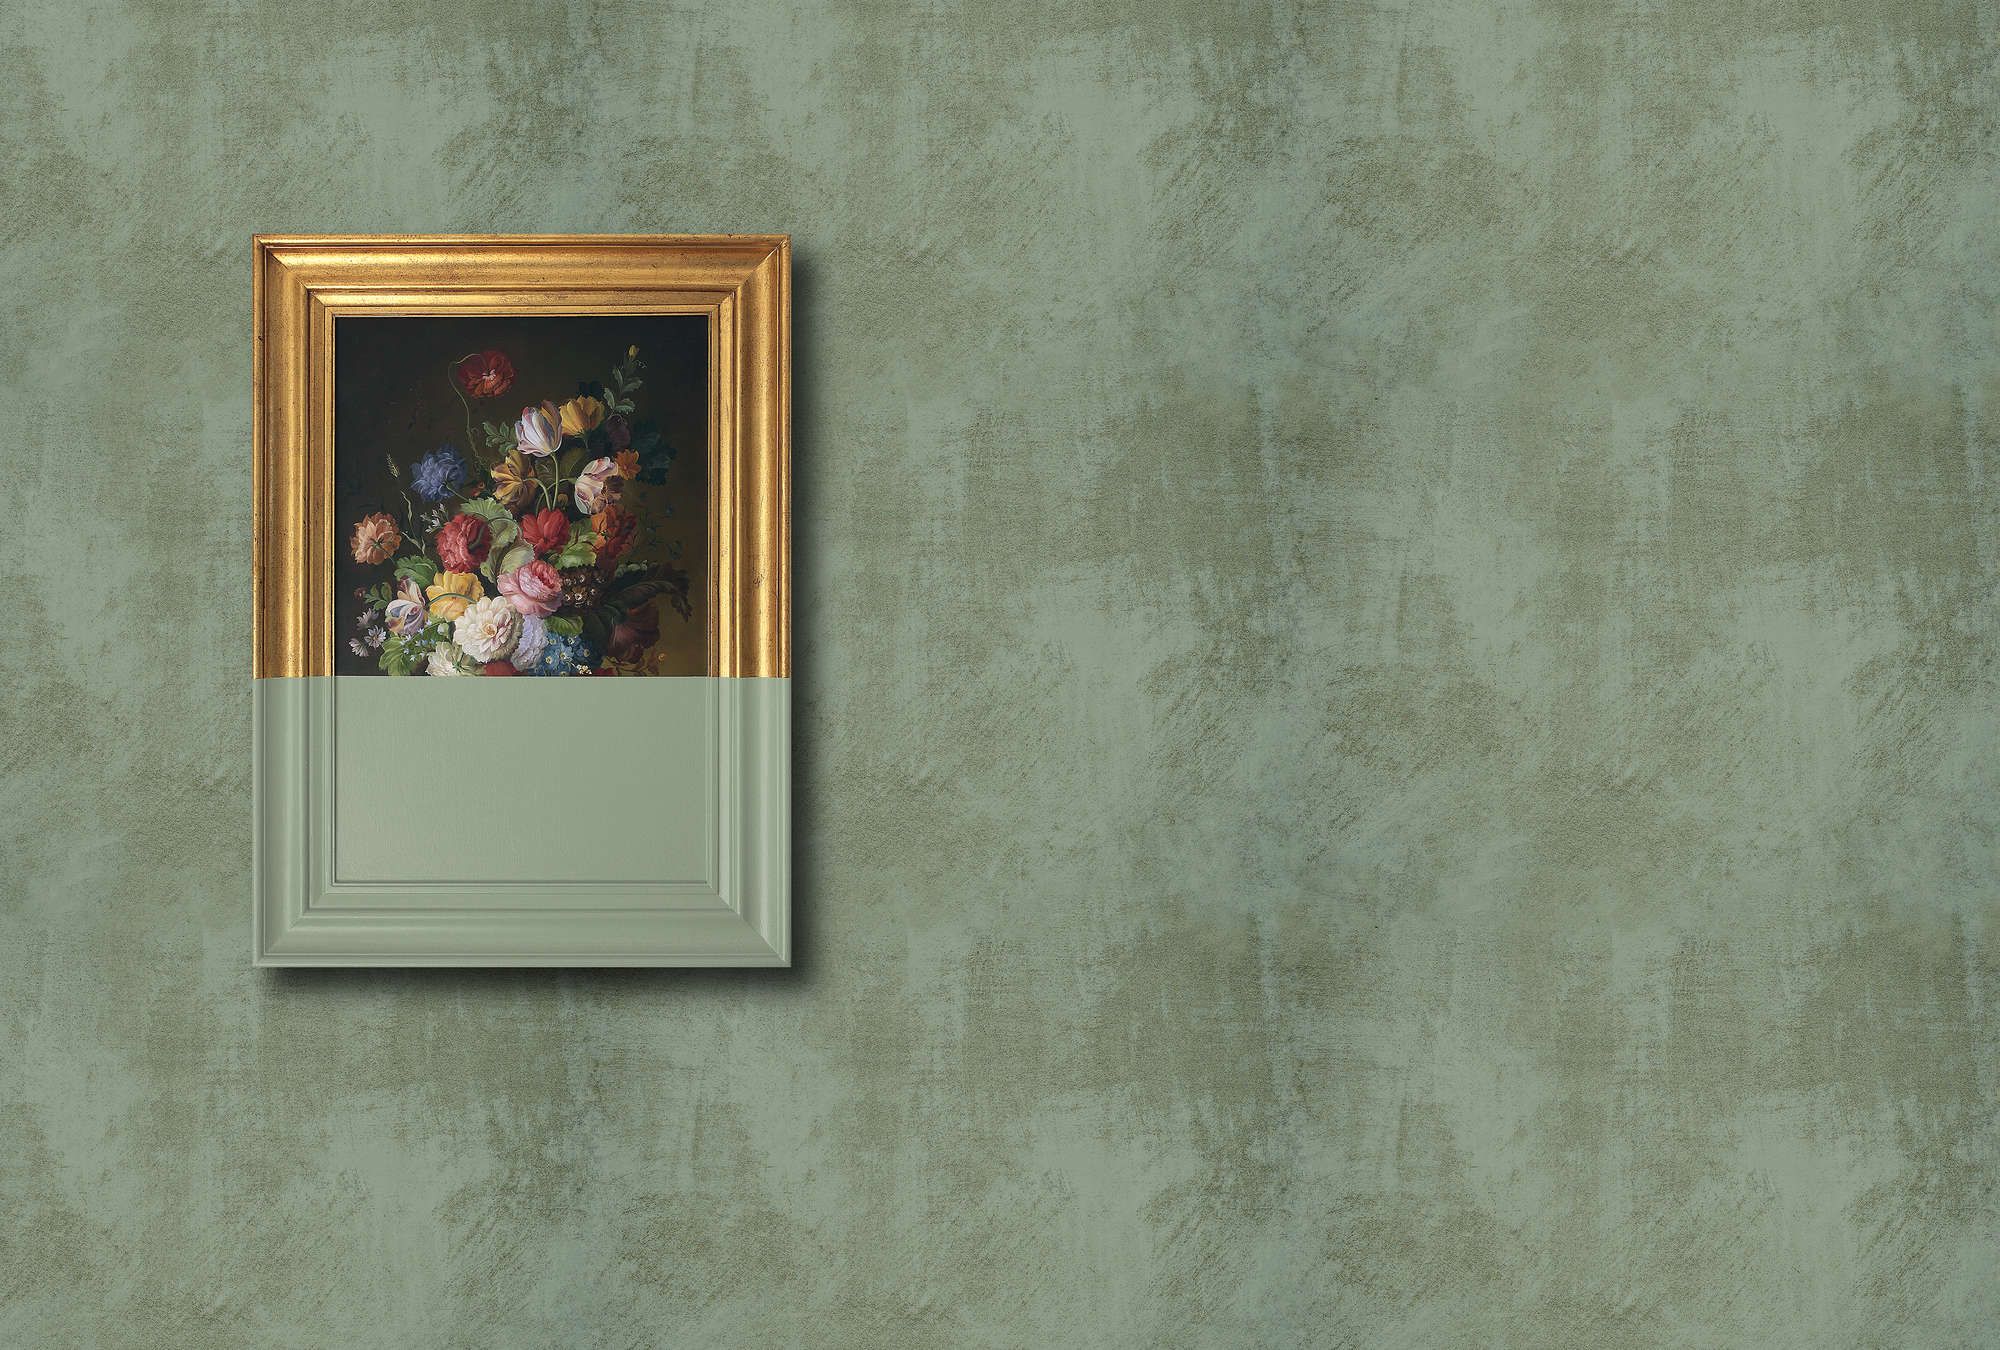             Frame 3 - Wallpaper Painted Over Artwork, Green - Wipe Clean Texture - Green, Copper | Matt Smooth Non-woven
        